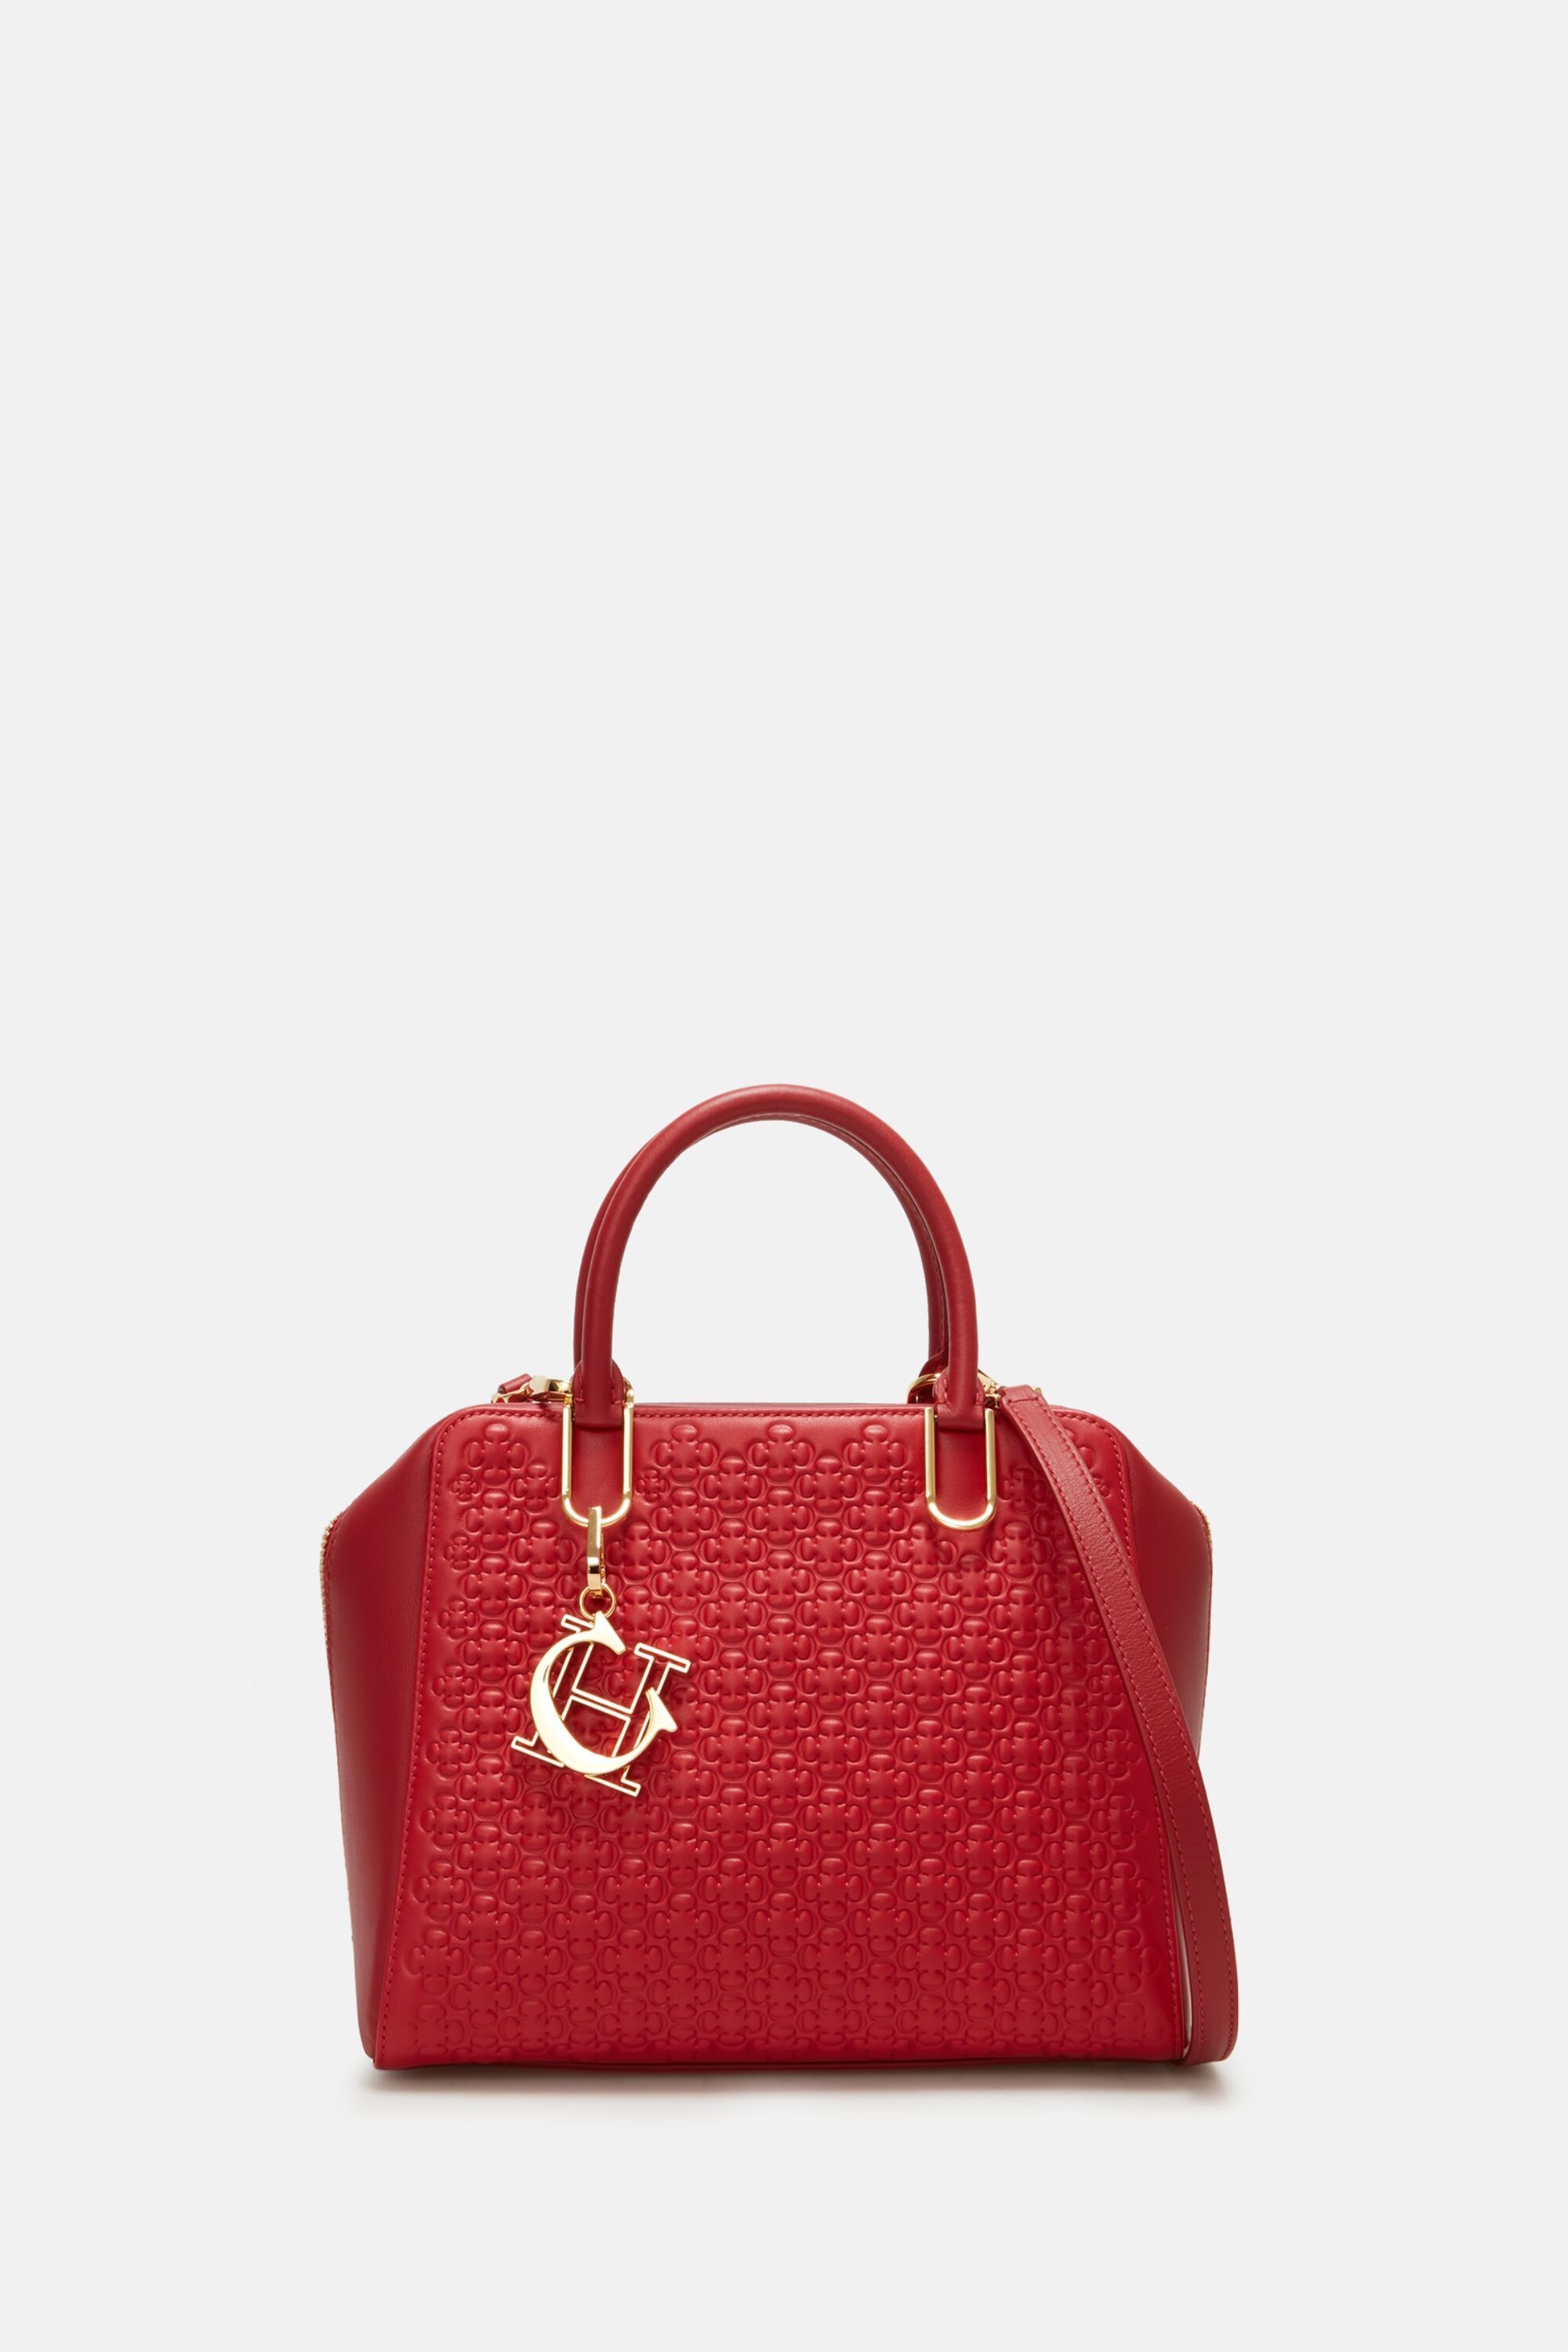 Baron | Medium shoulder bag red - CH Carolina Herrera United States